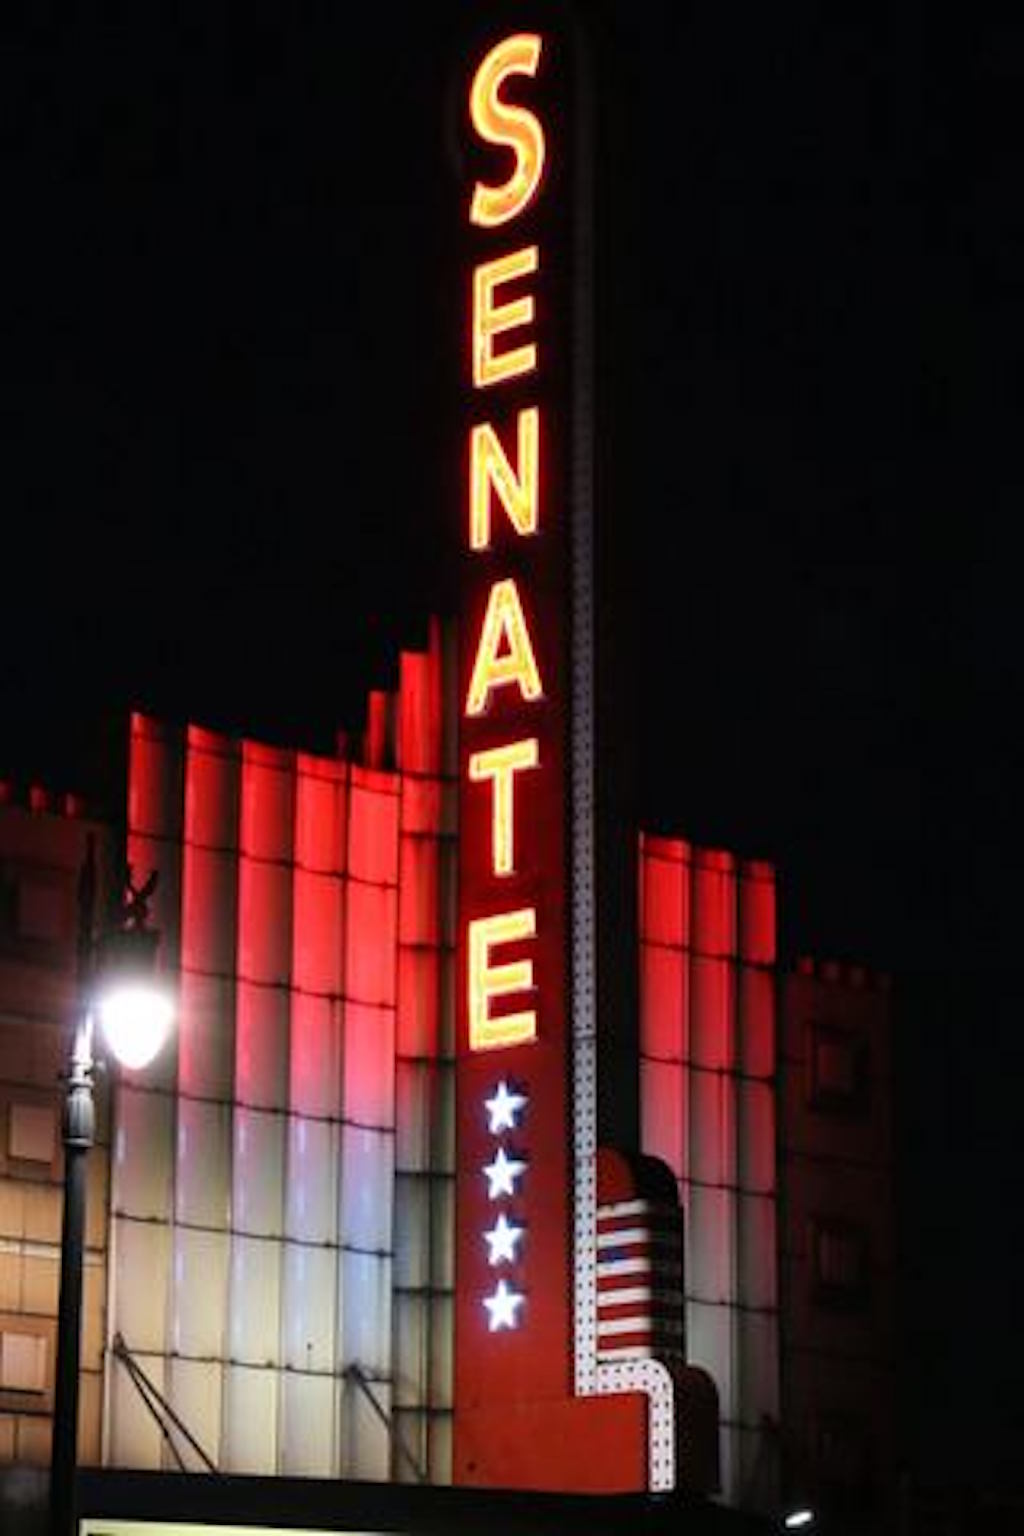 Senate Theater in Southwest Detroit